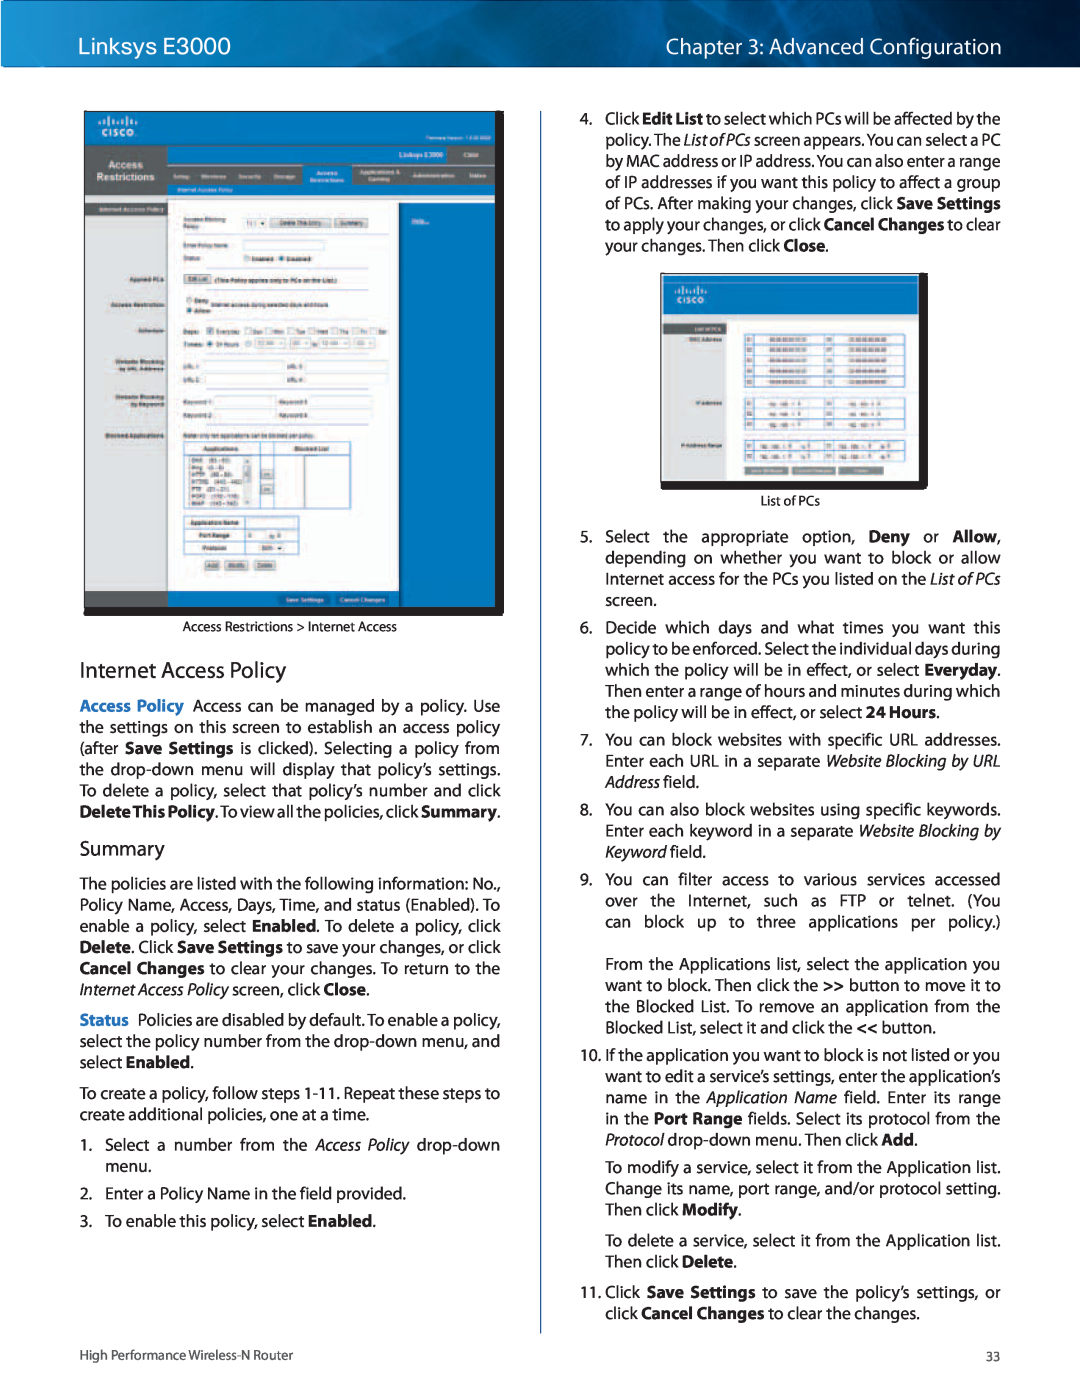 Linksys manual Internet Access Policy, Summary, Linksys E3000, Advanced Configuration 